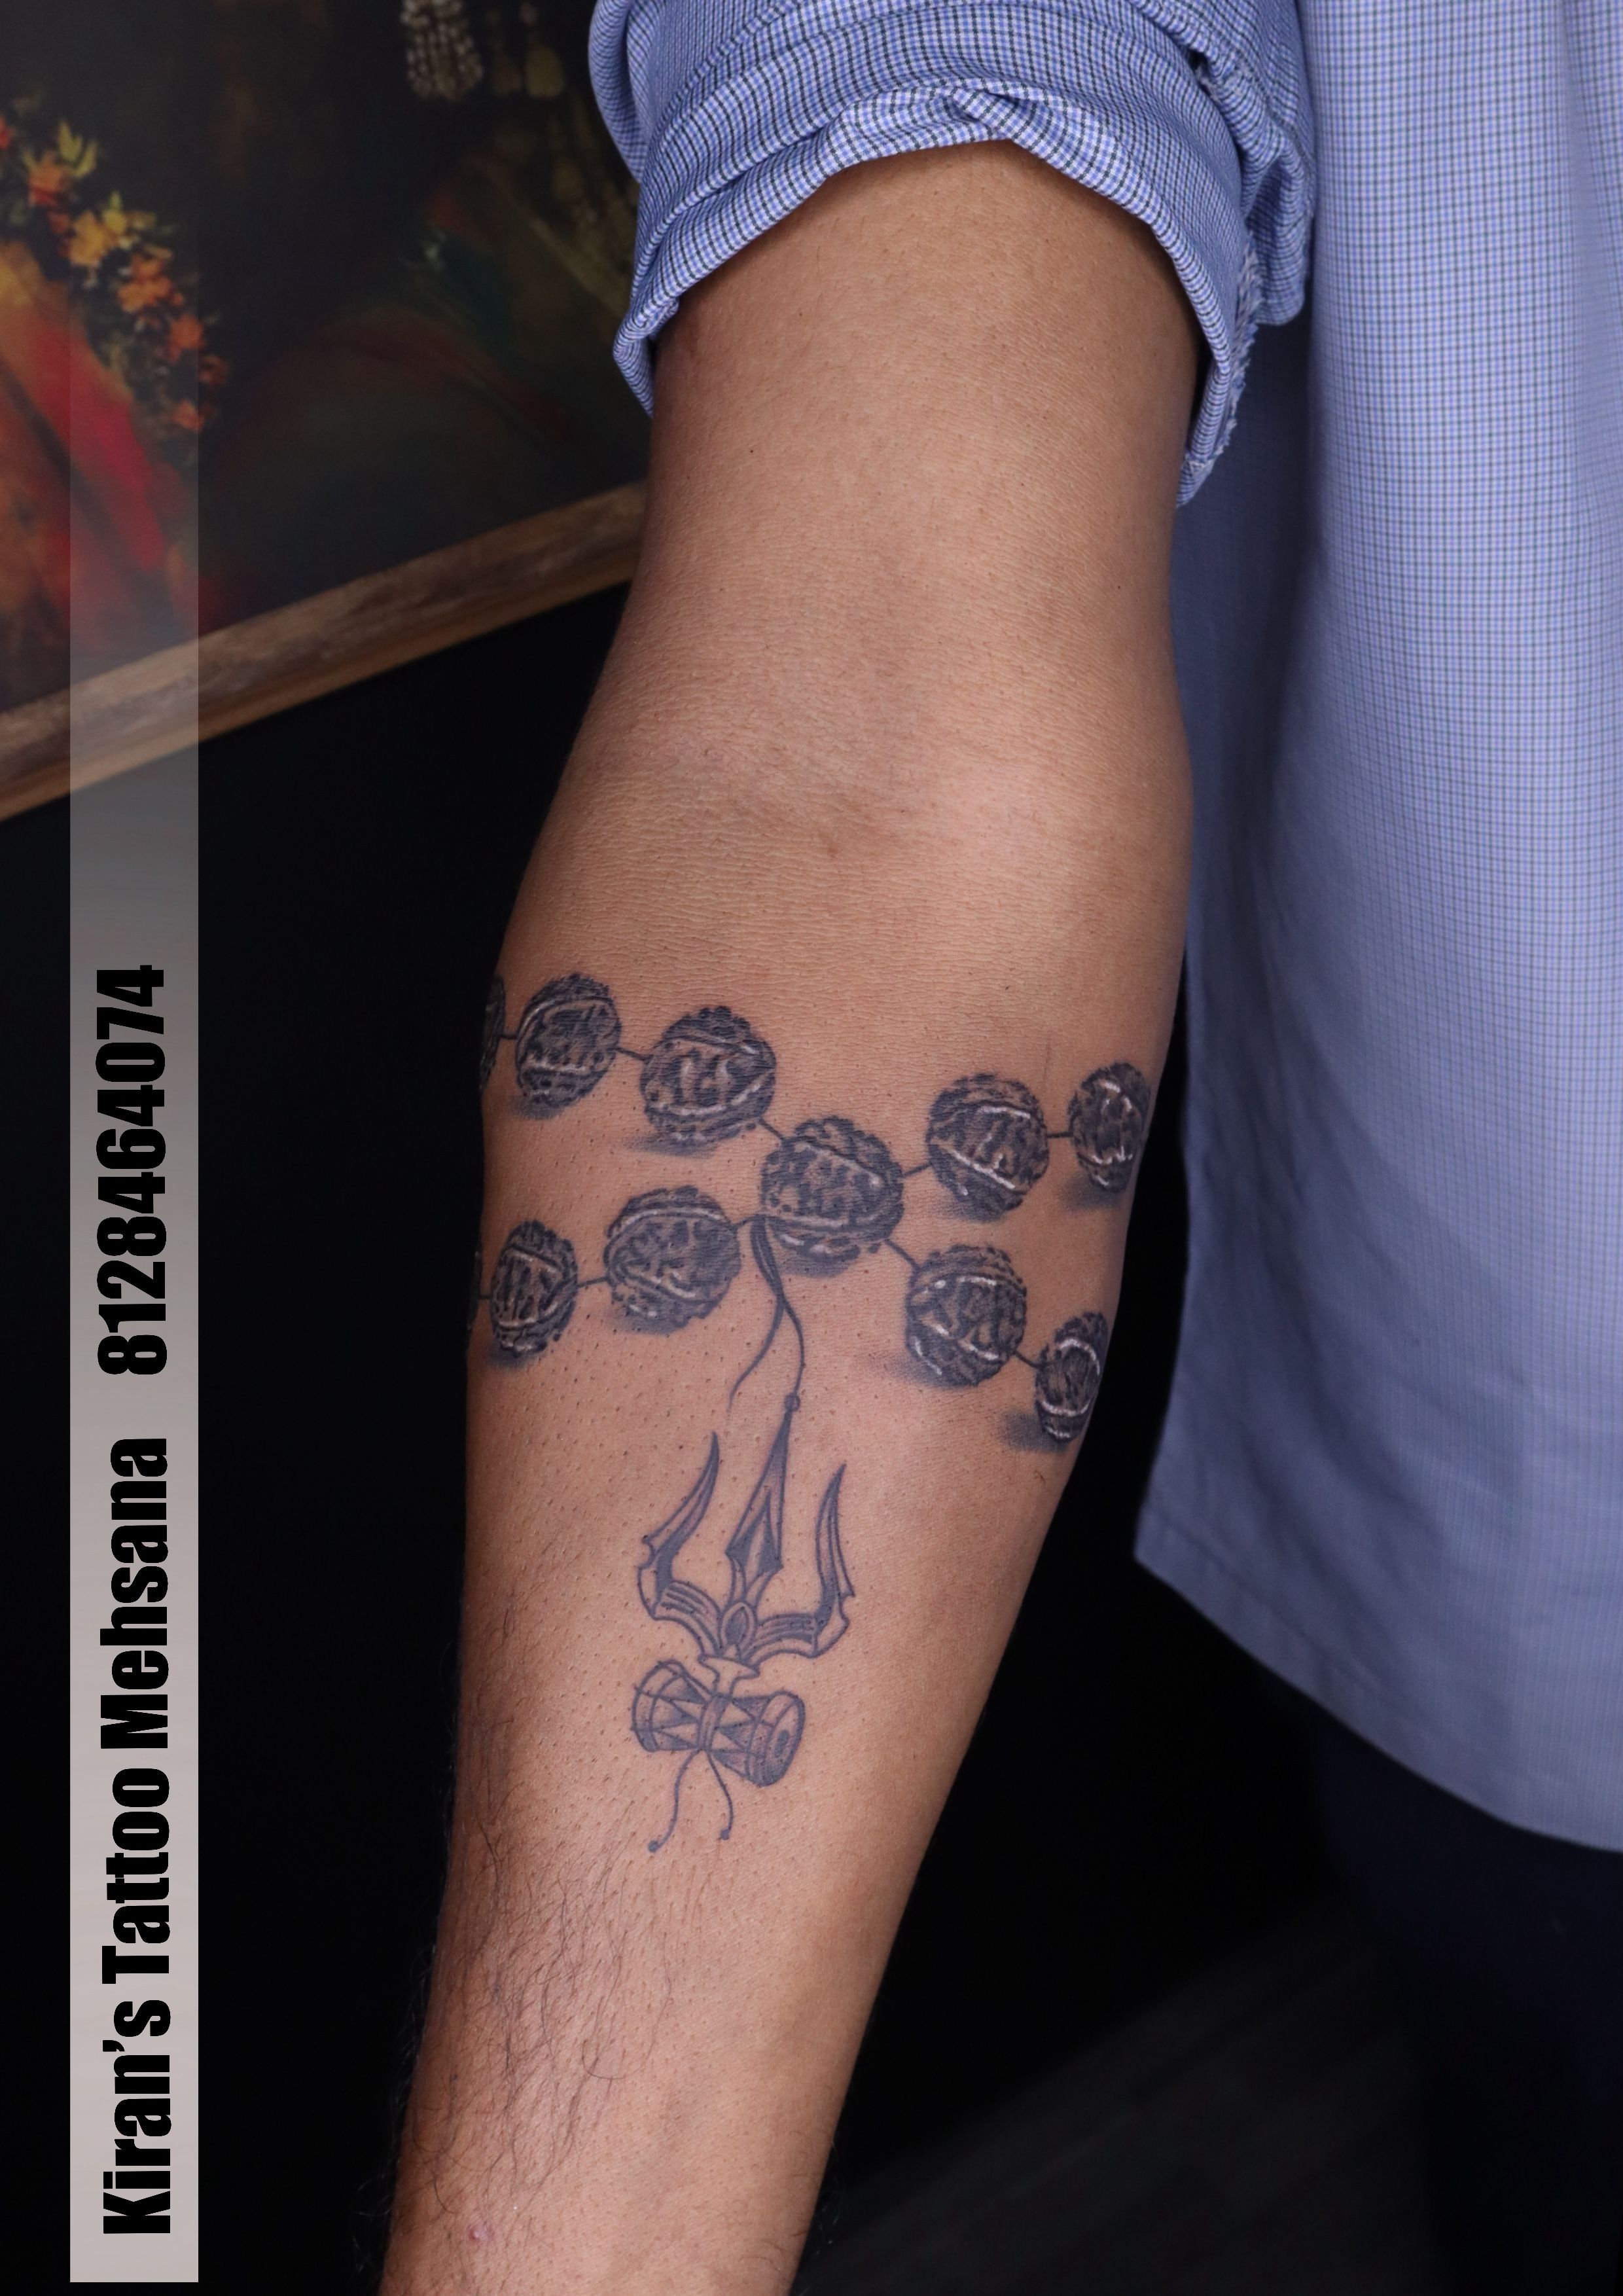 Rudraksha Armband Tattoo | Arm band tattoo, Forearm band tattoos, Band  tattoos for men